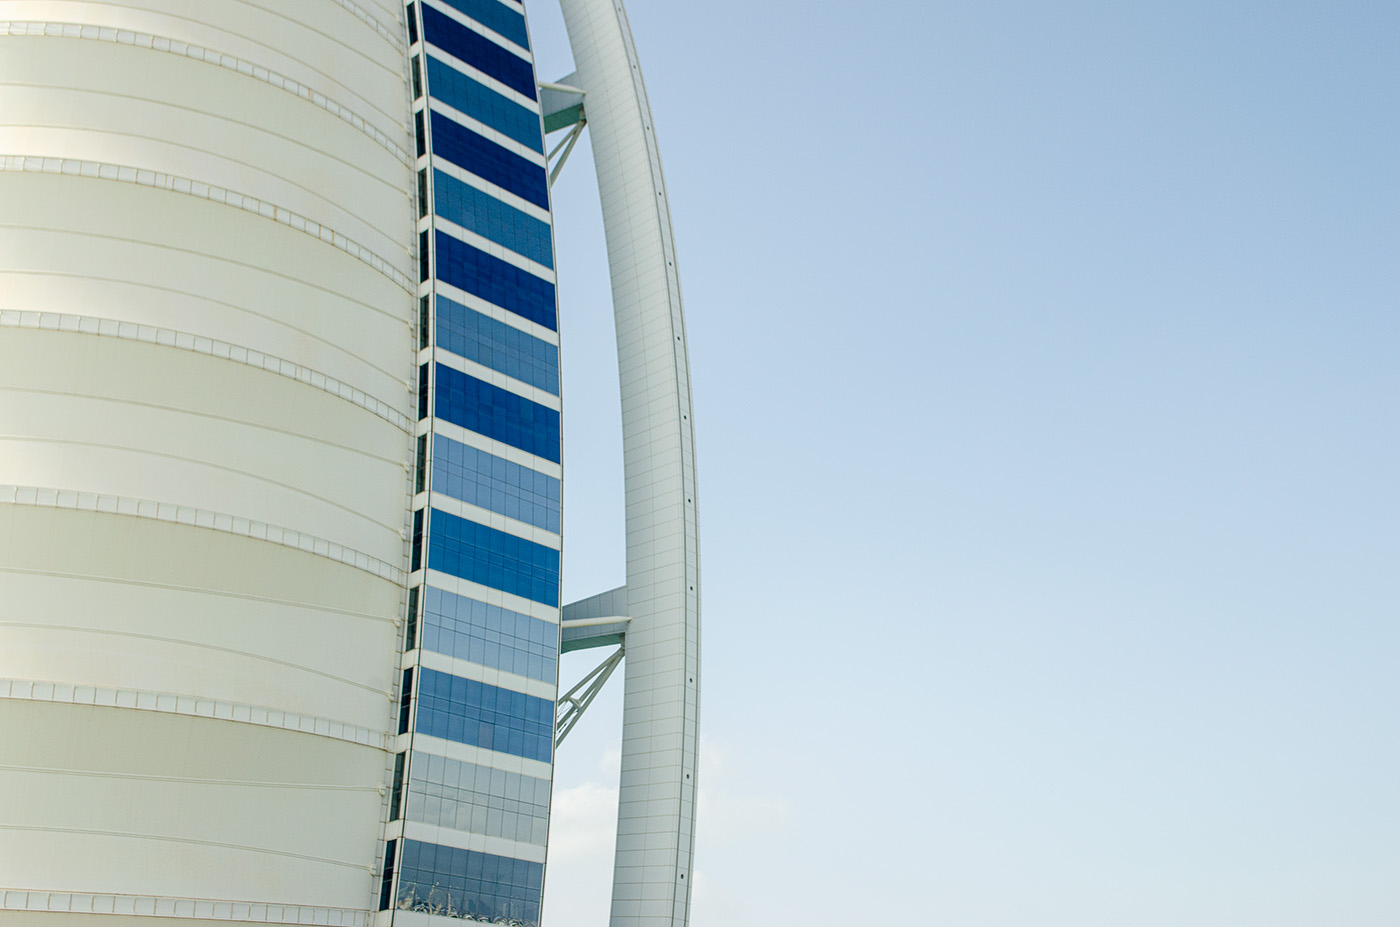 Detail of the Burj Al Arab's sail